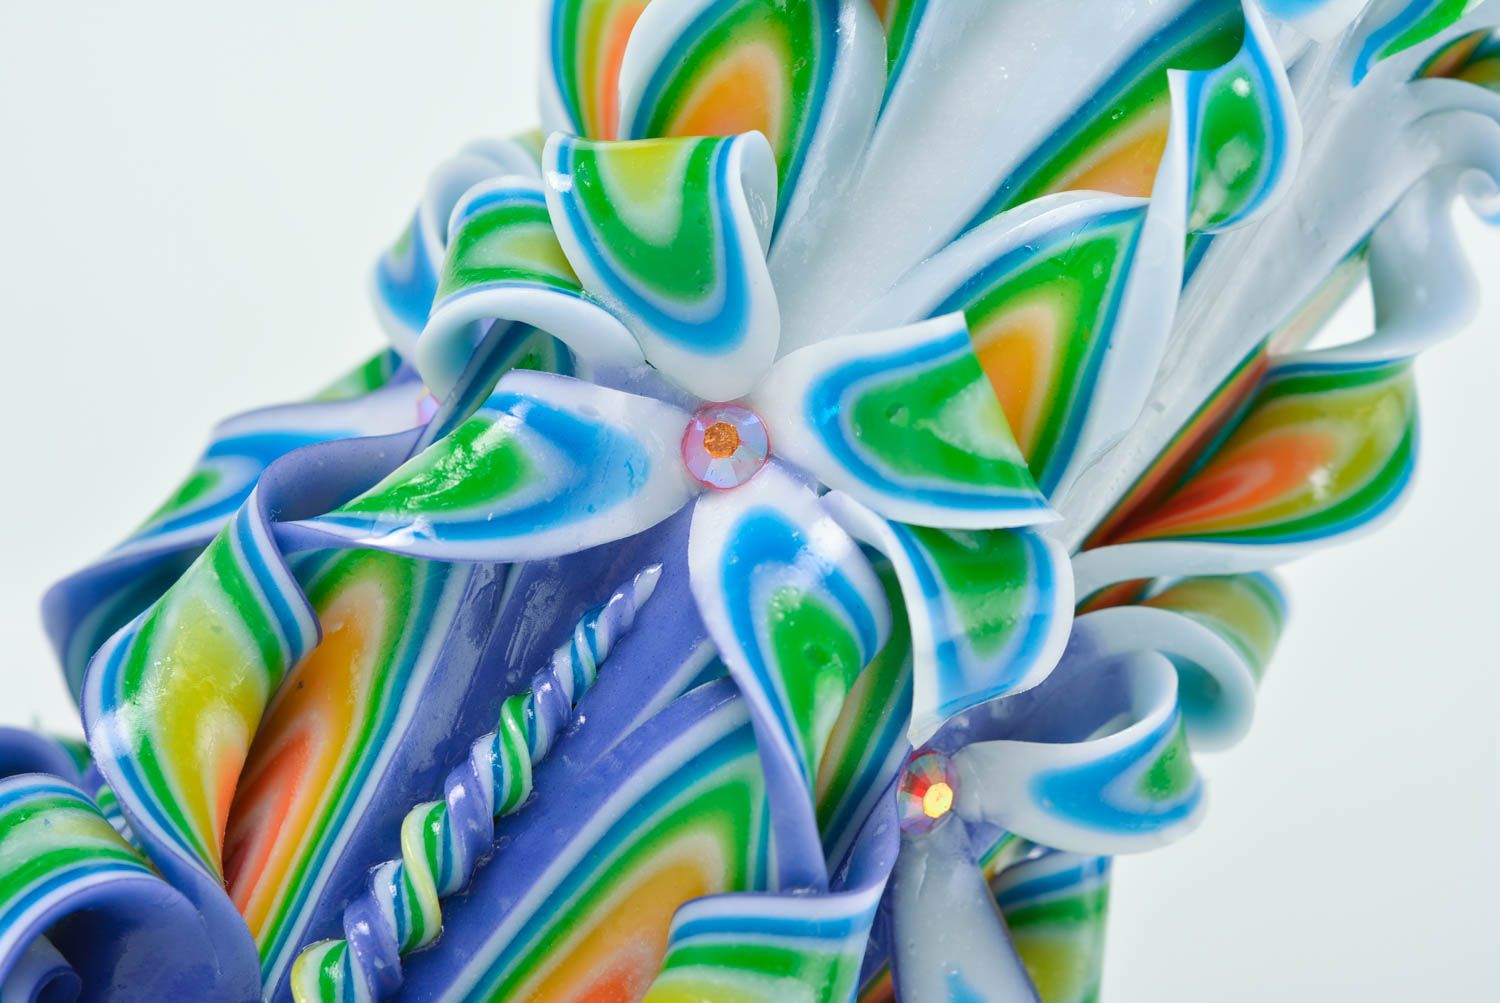 Bougie sculptée artisanale multicolore faite main grande originale décorative photo 2